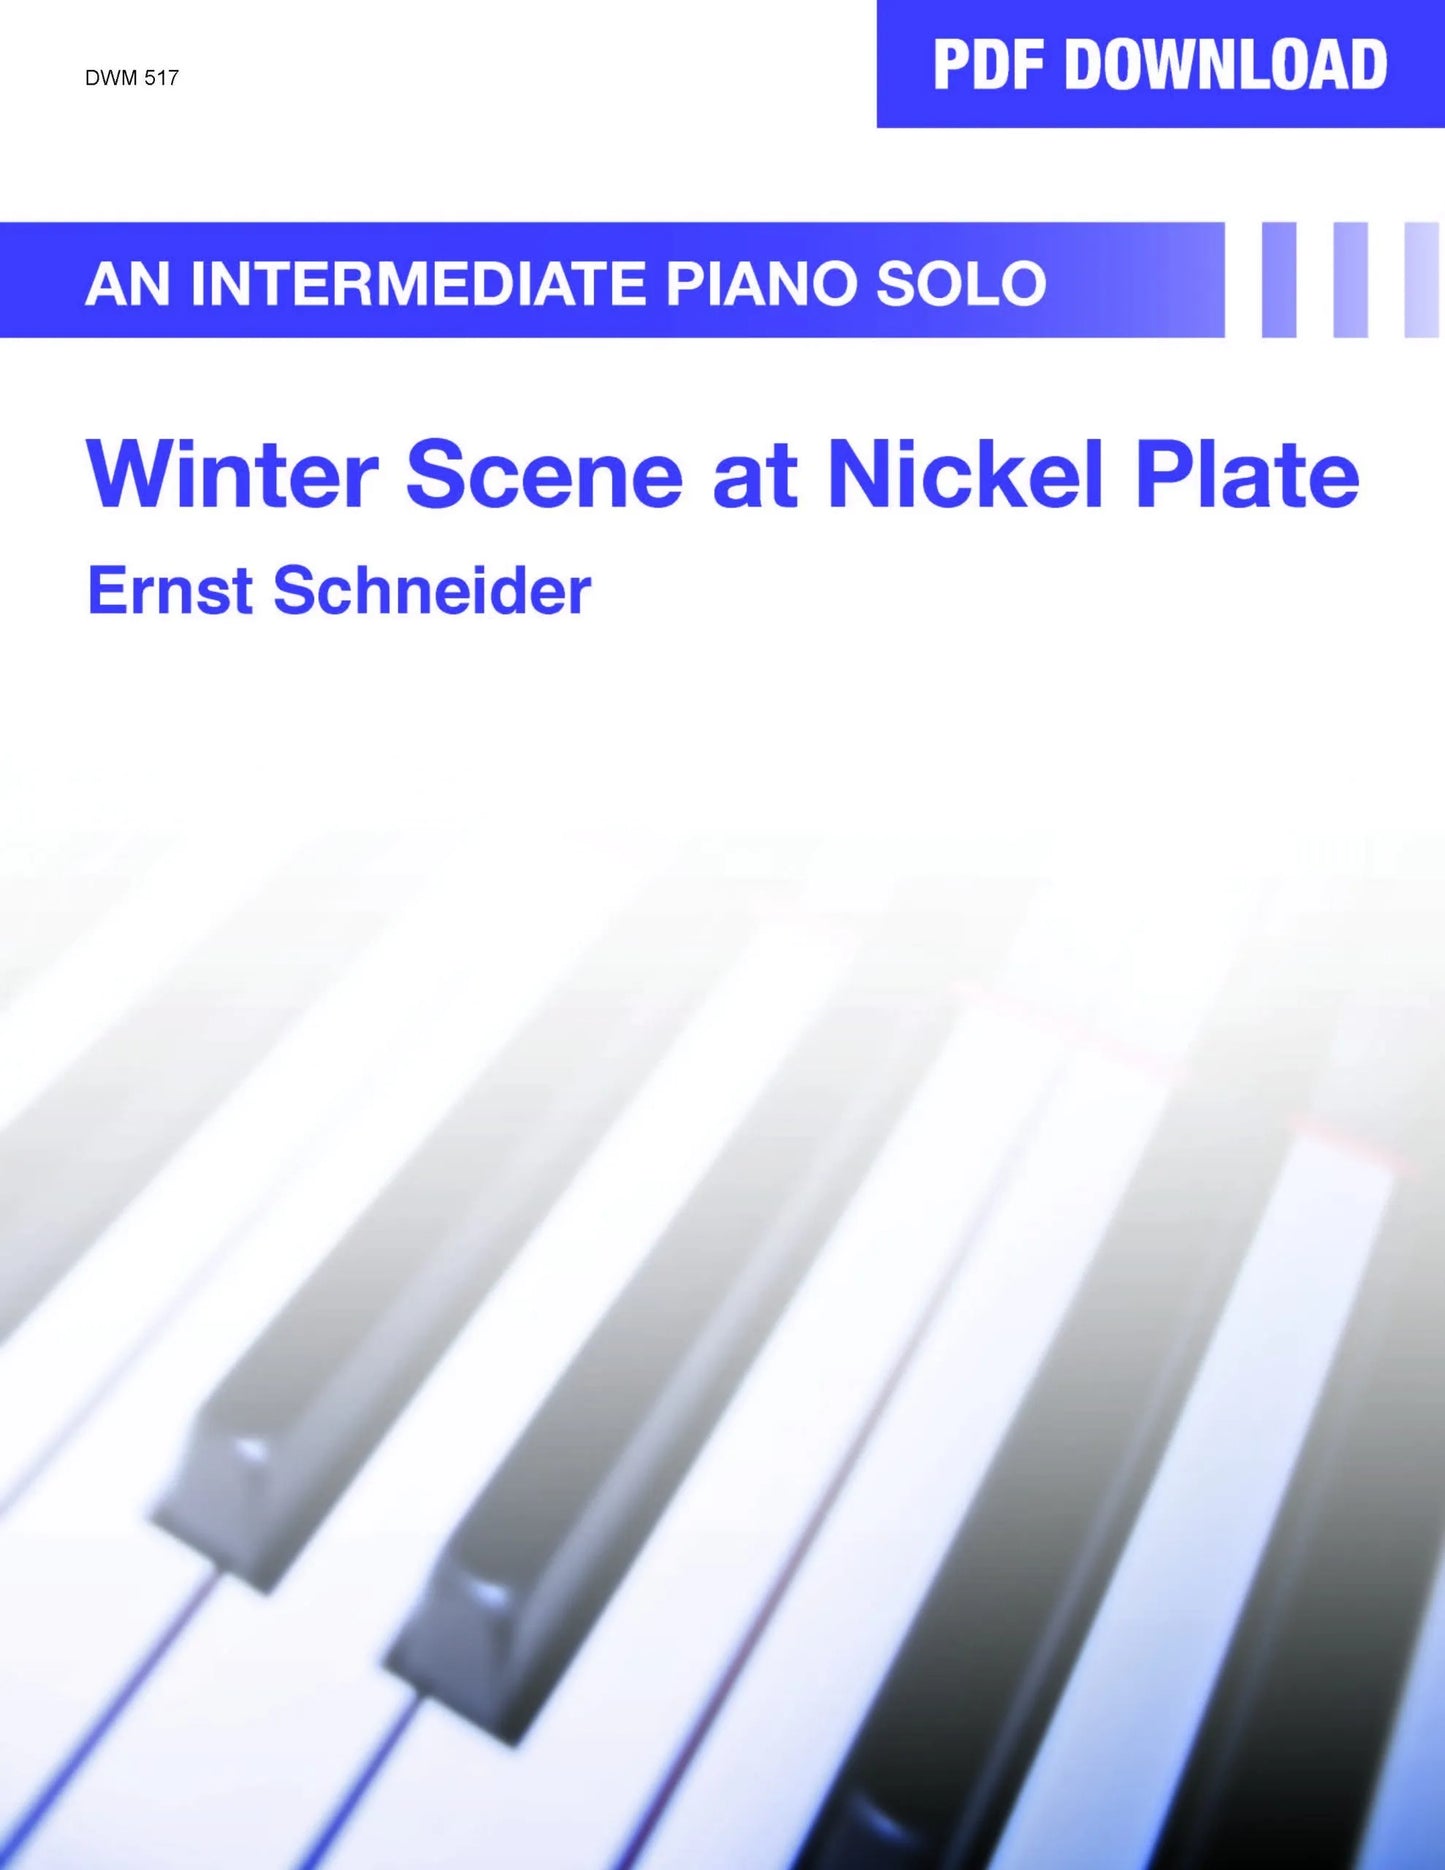 Winter Scene at Nickel Plate (PDF Download)